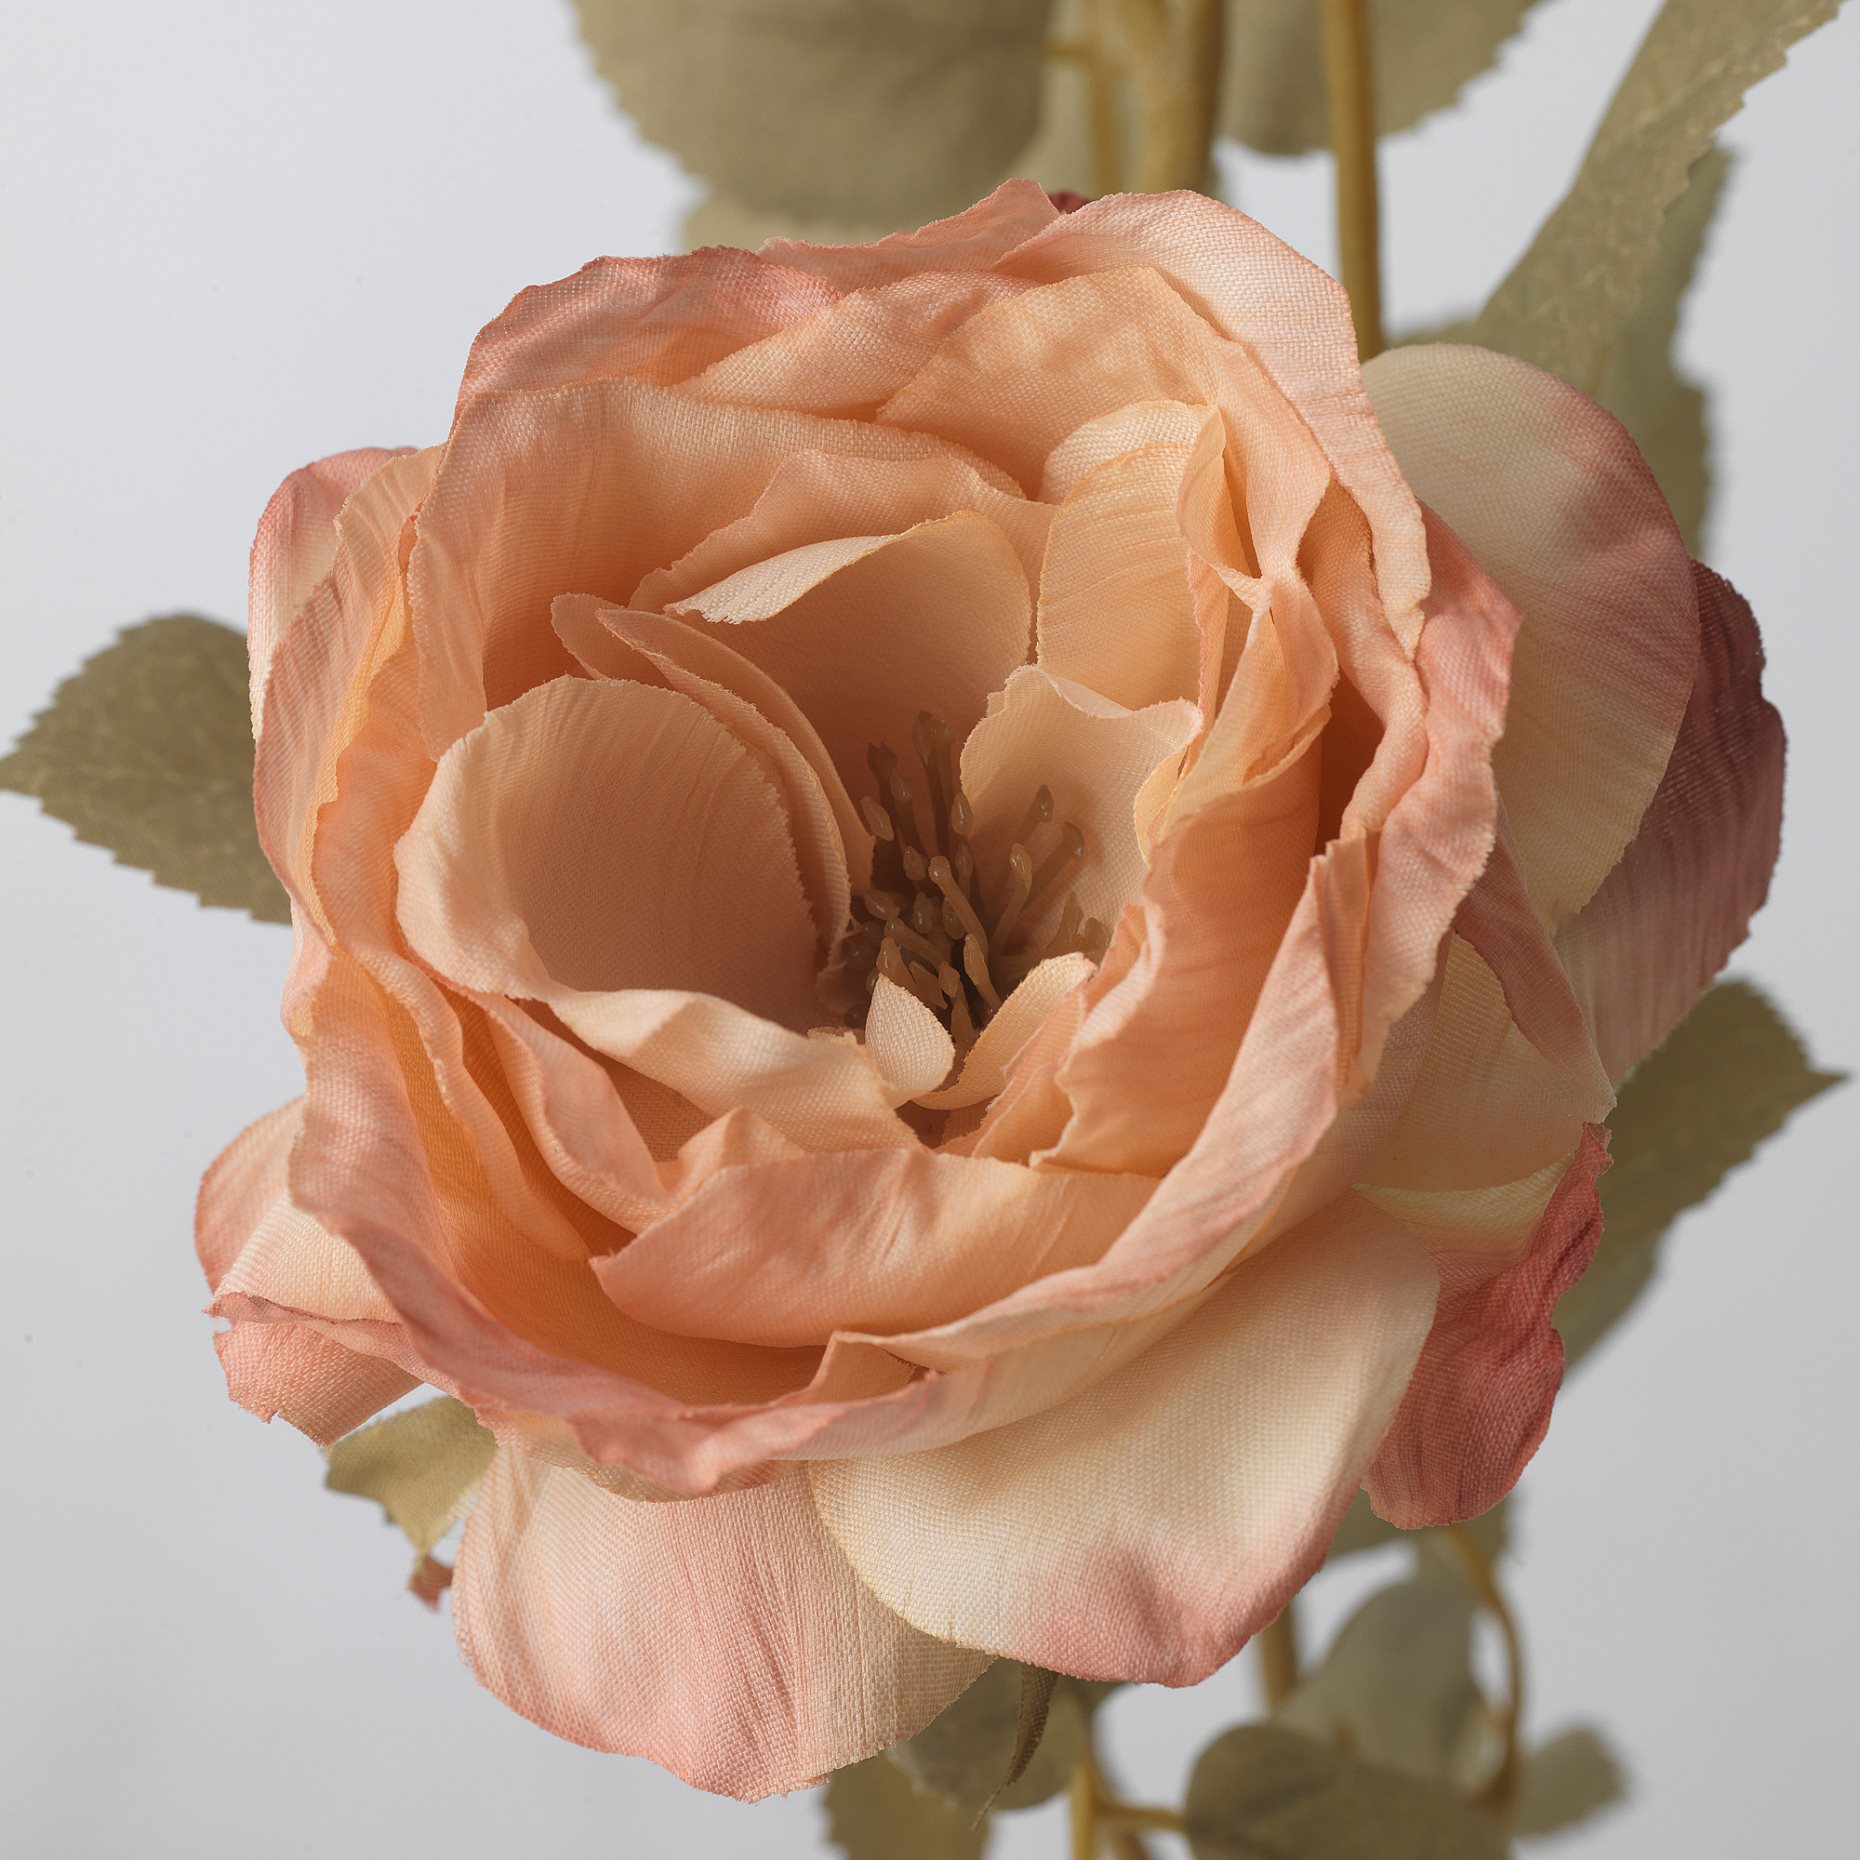 SMYCKA, τεχνητό λουλούδι εσωτερικού/εξωτερικού χώρου/Τριαντάφυλλο, 63 cm, 805.601.20